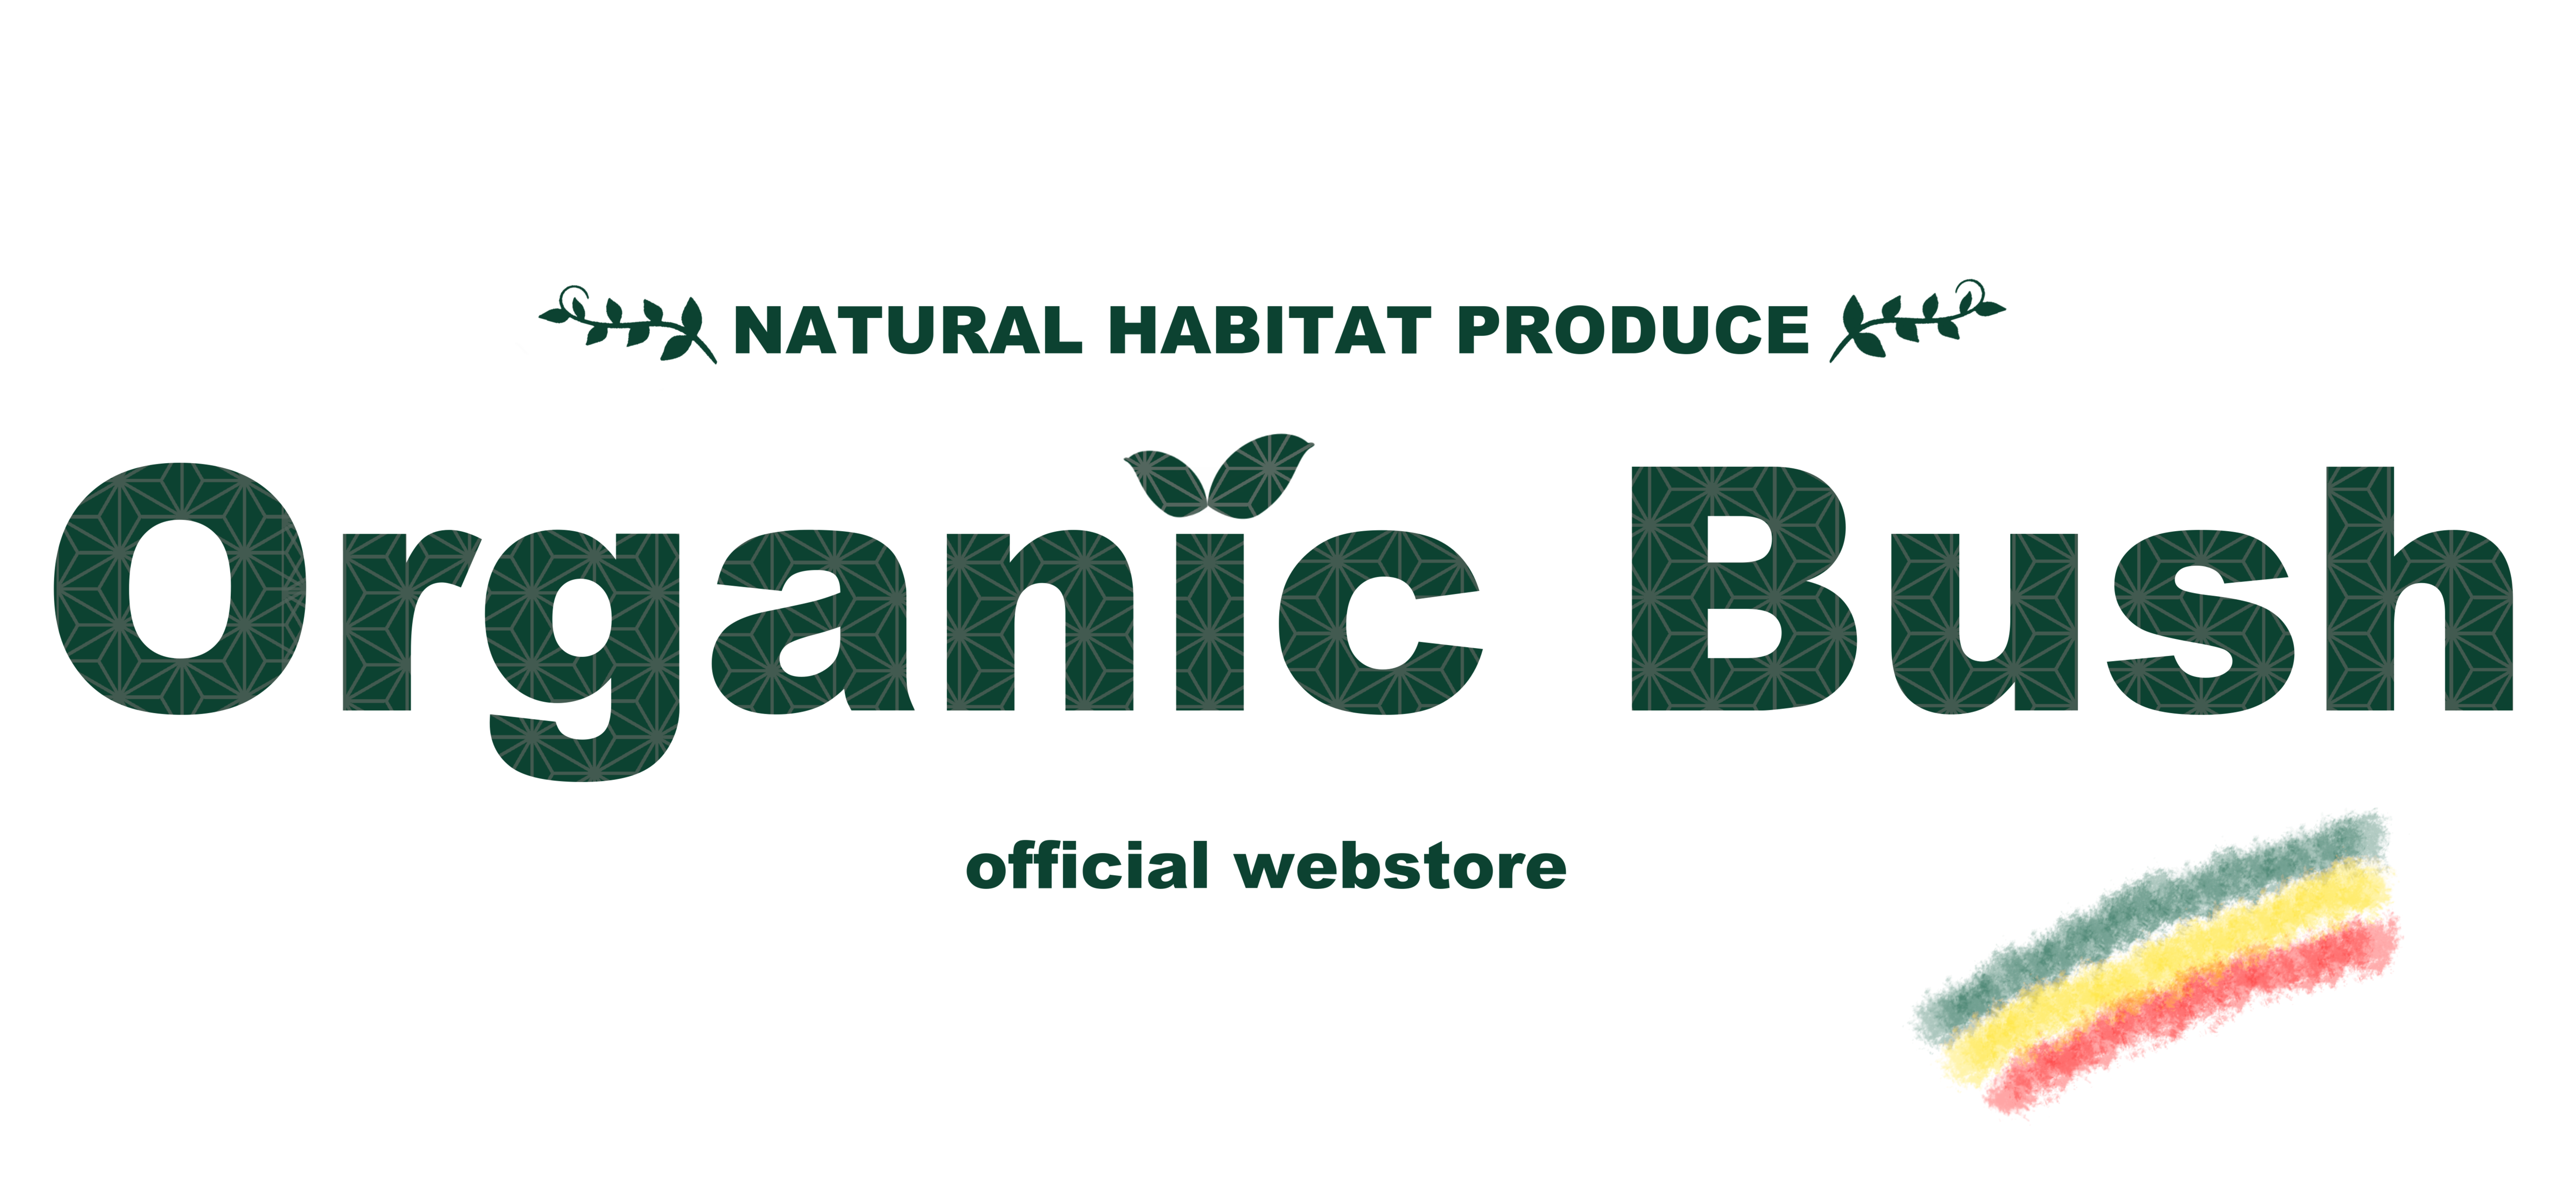 Organic Bush official webstore